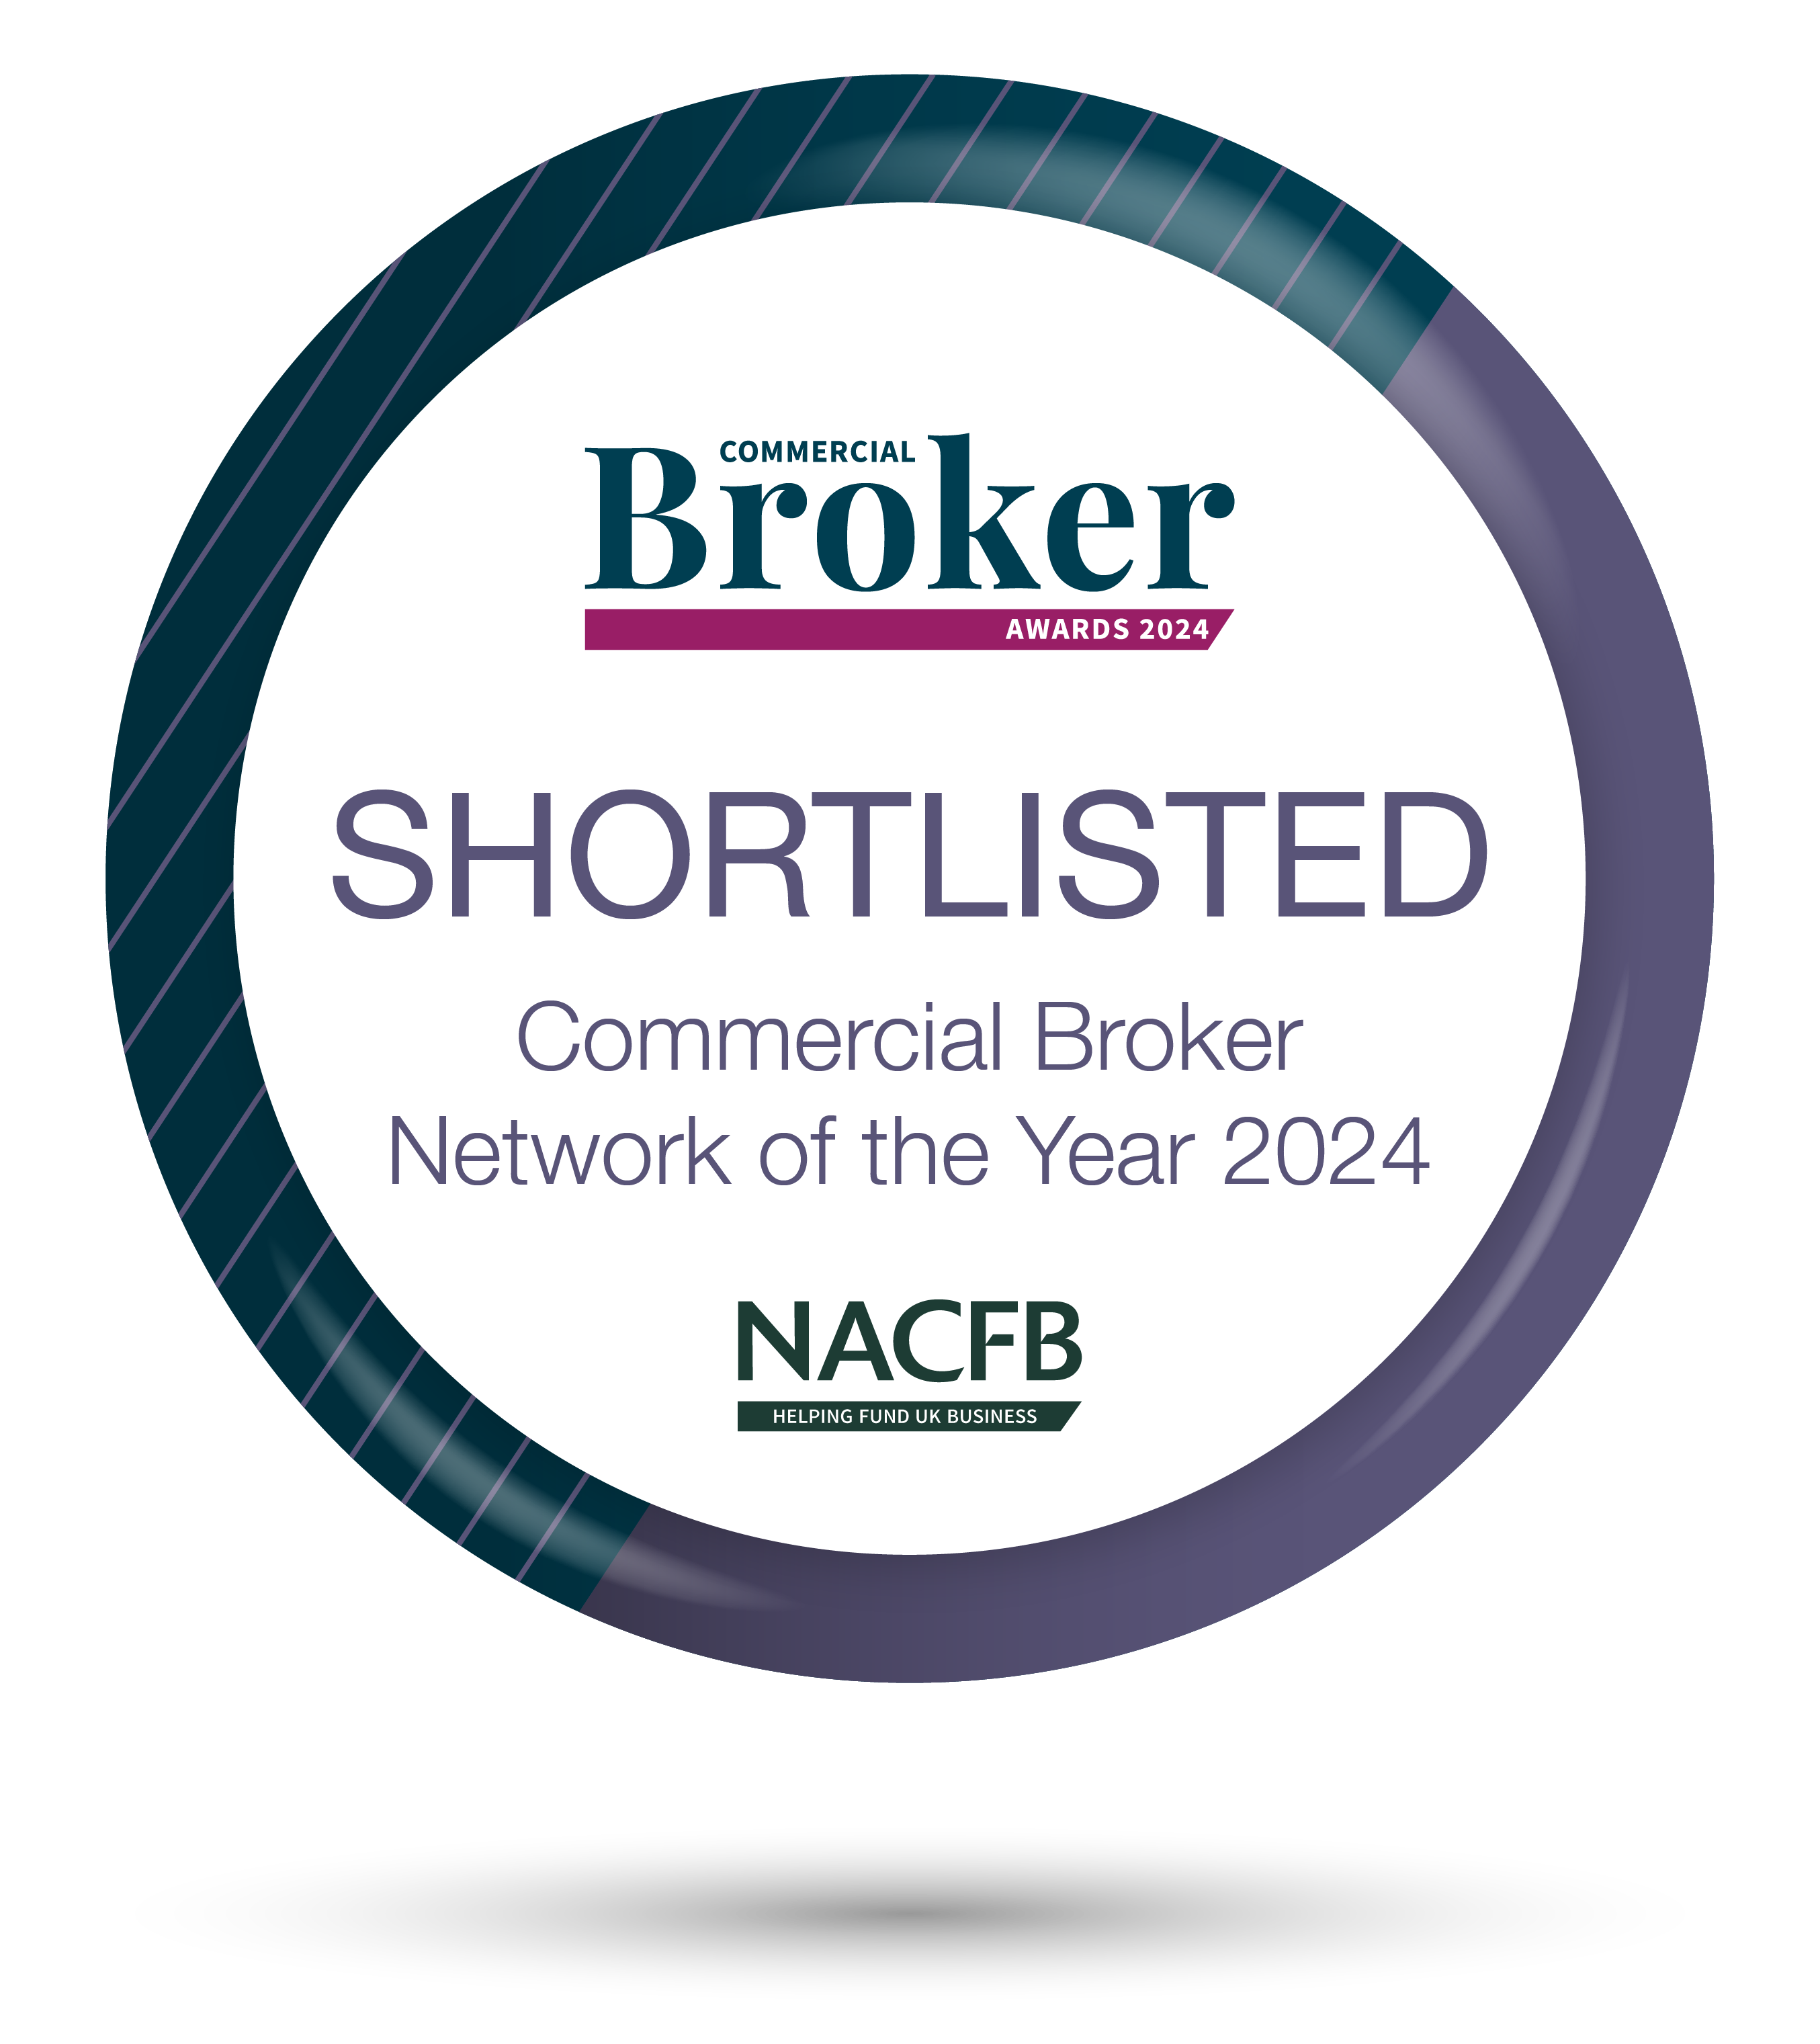 NACFB Commercial Broker Awards 2024 Shortlisted